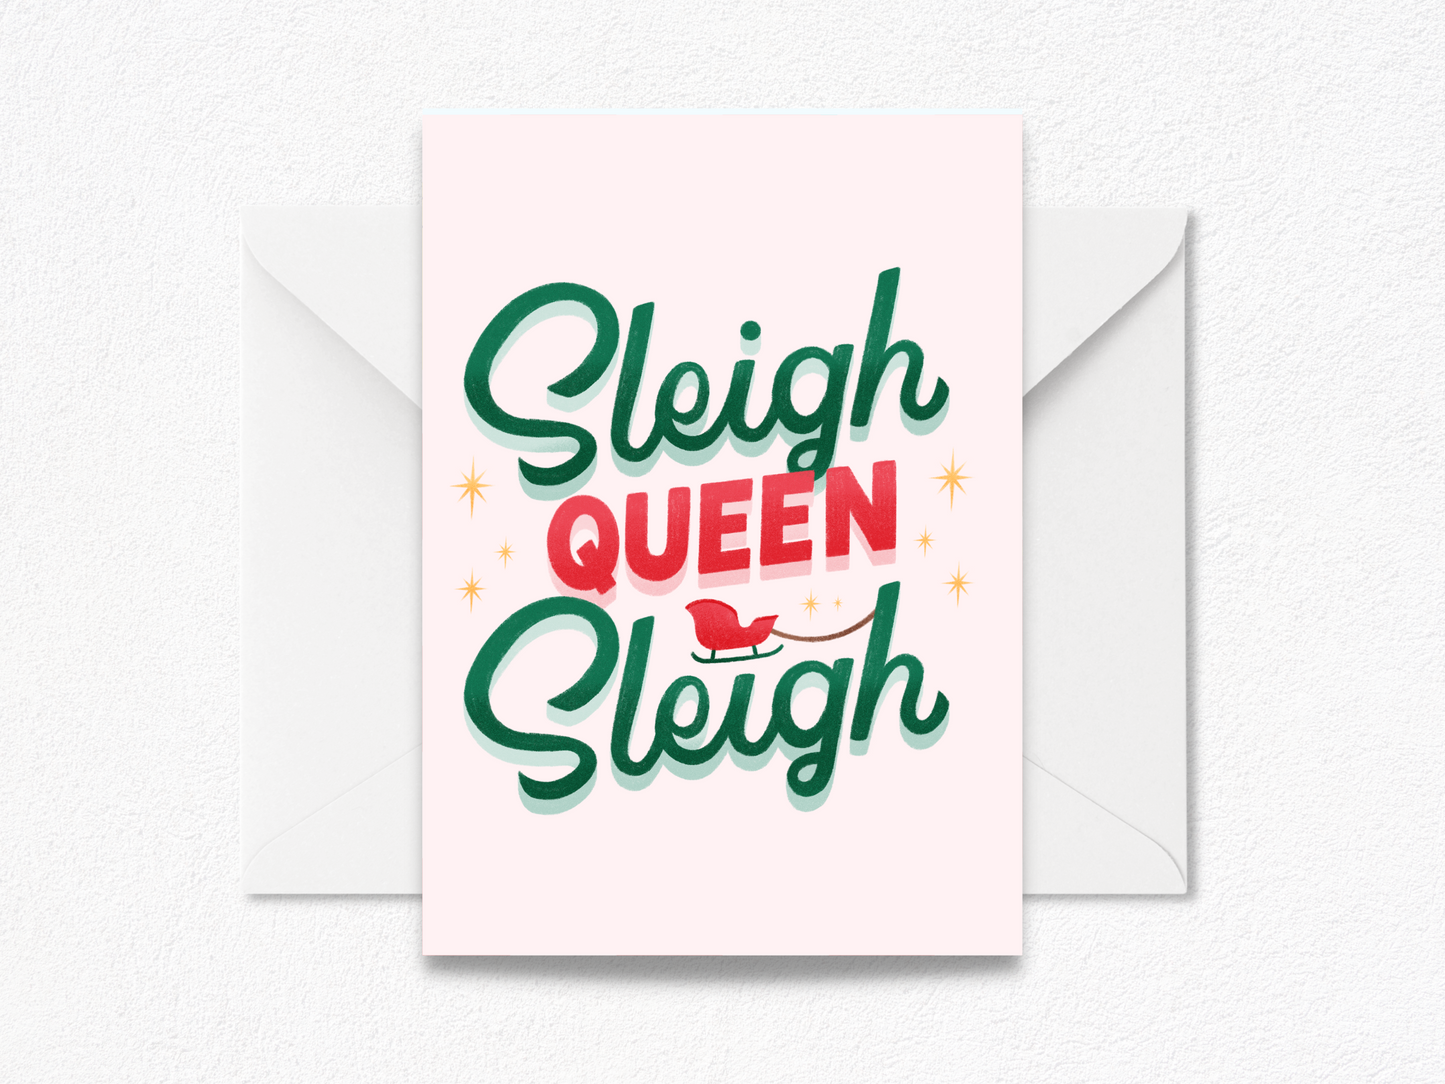 Sleigh Queen Sleigh - Christmas Card - Holiday Greetings